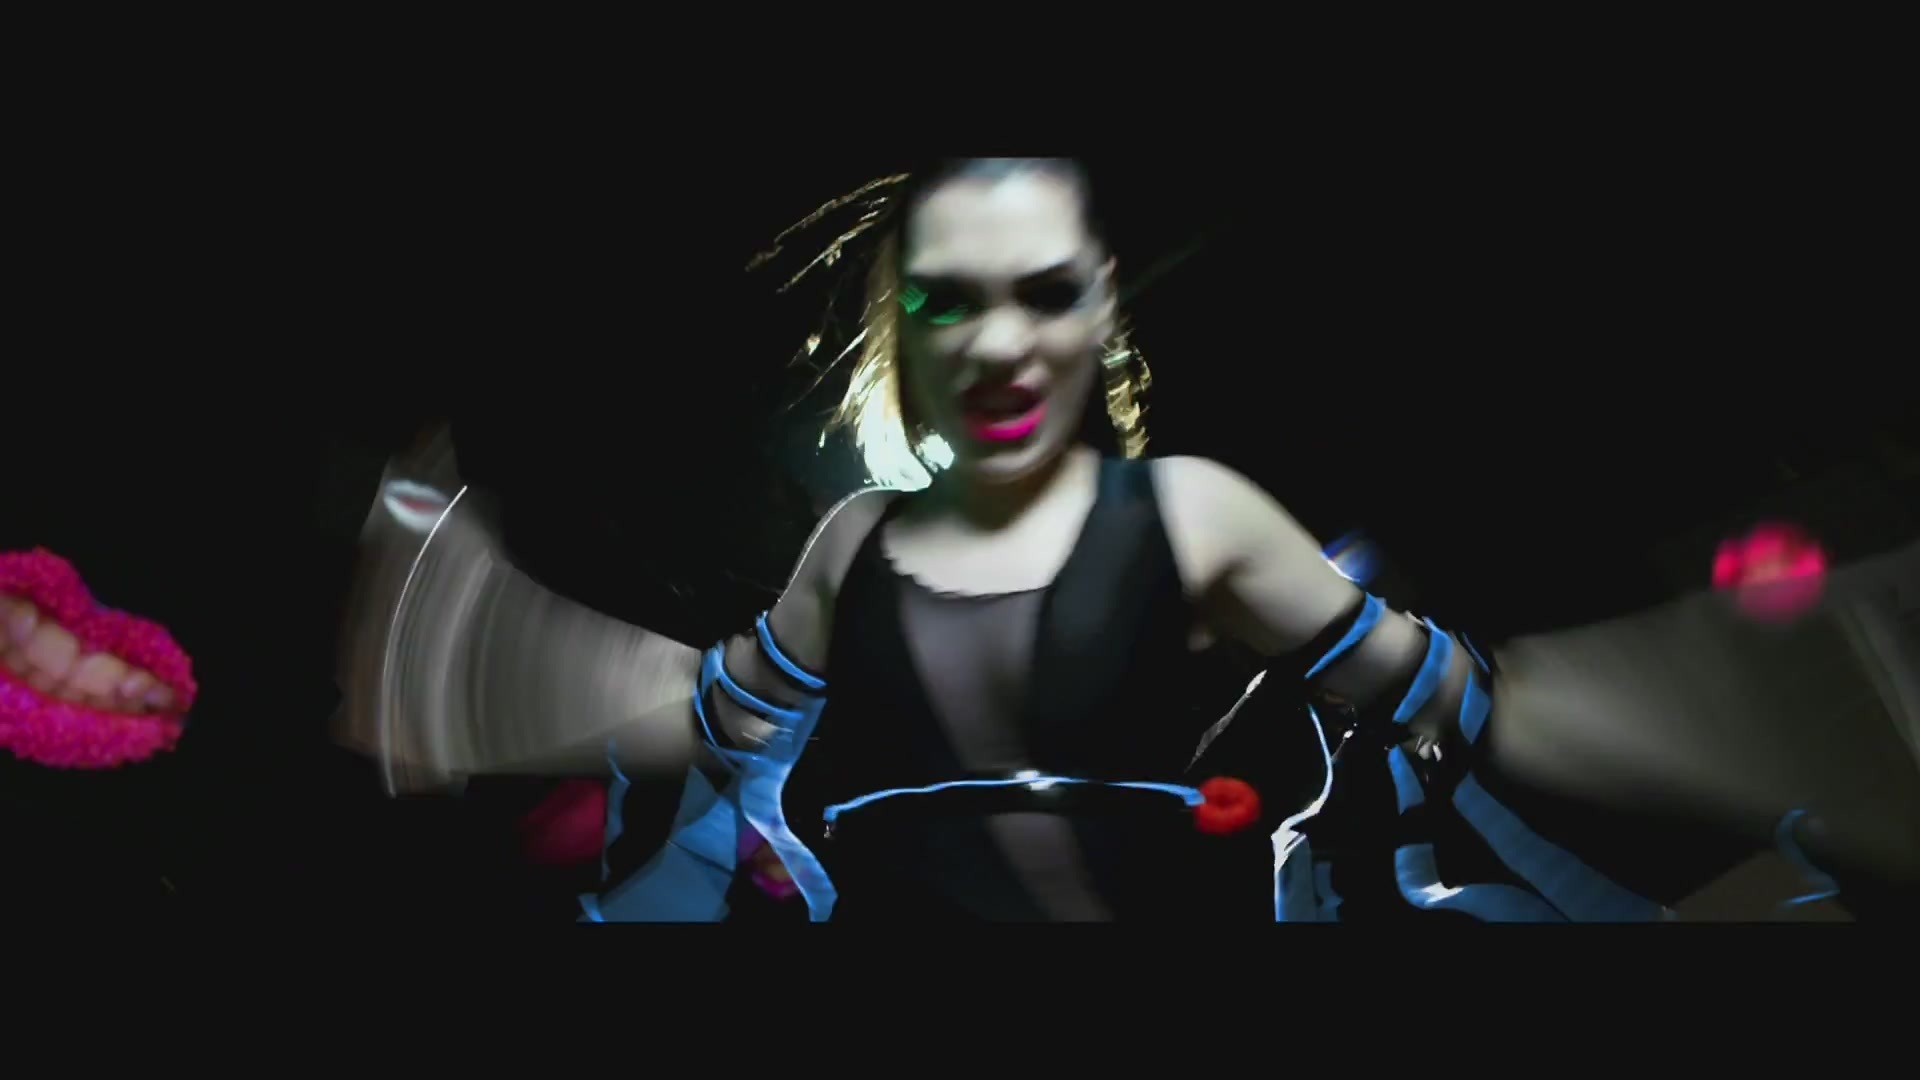 Nobody's Perfect [Music Video] - Jessie J Image (21700134) - Fanpop